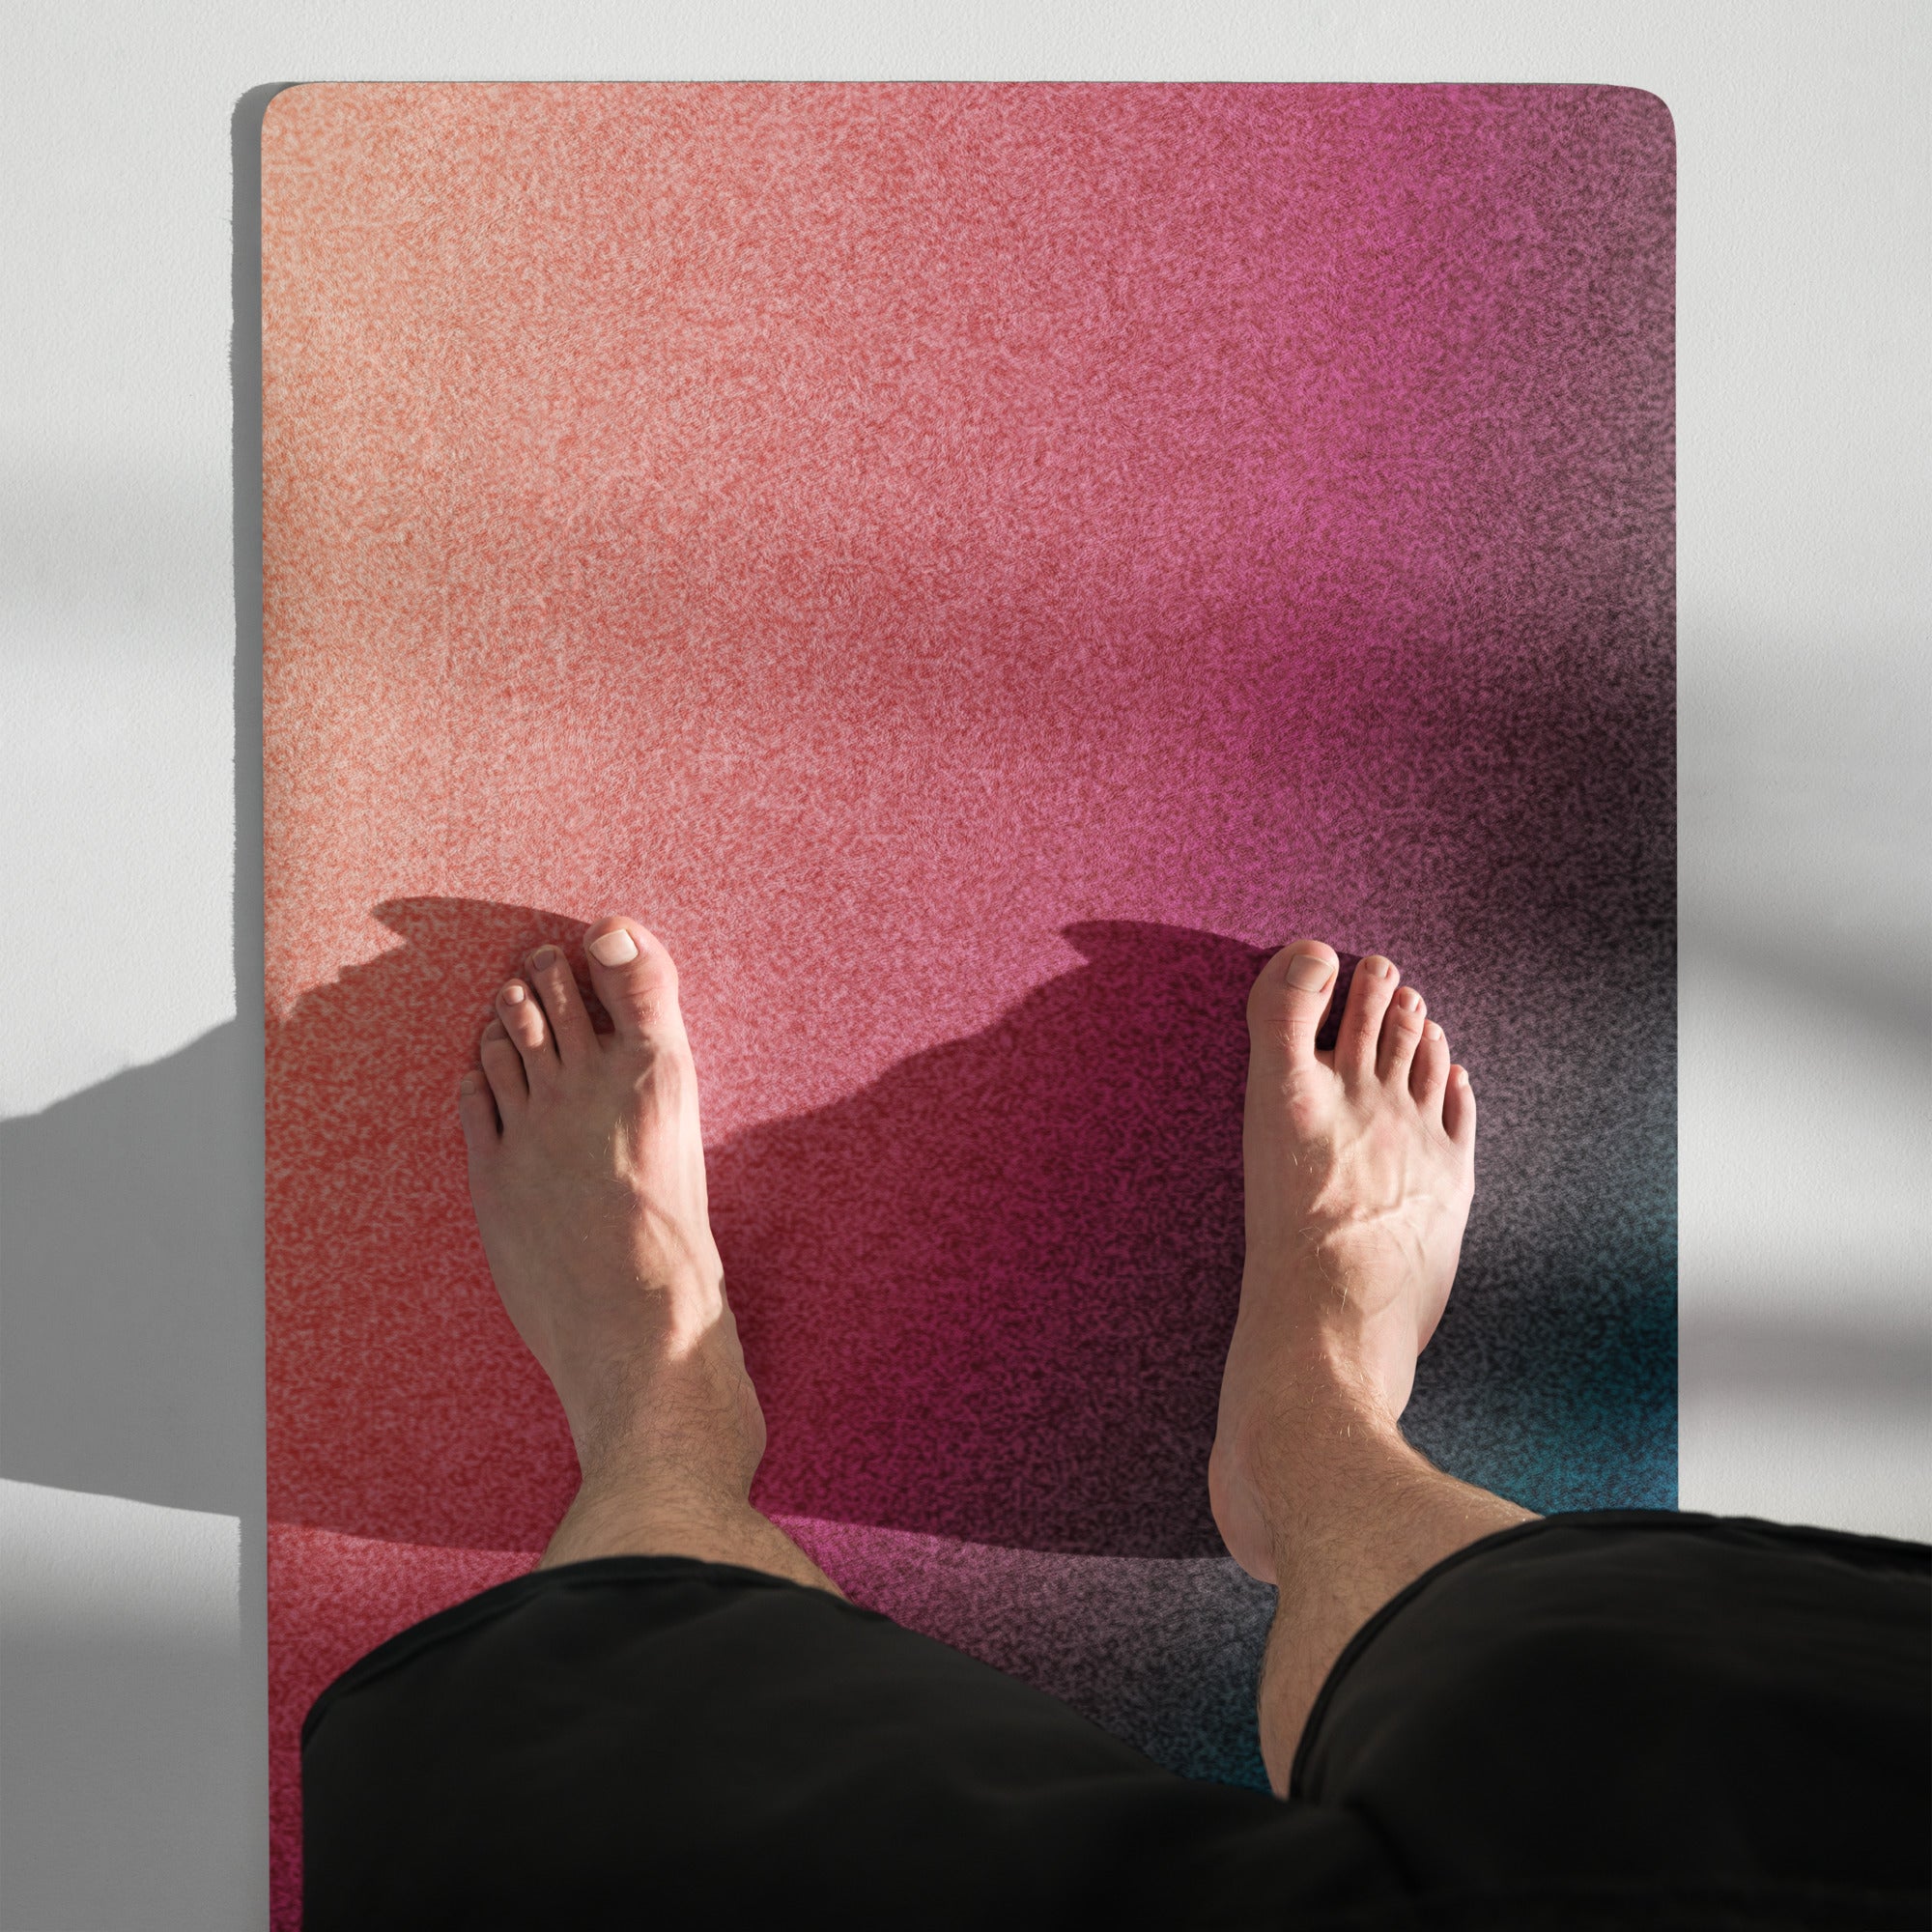 Color Karma Yoga mat